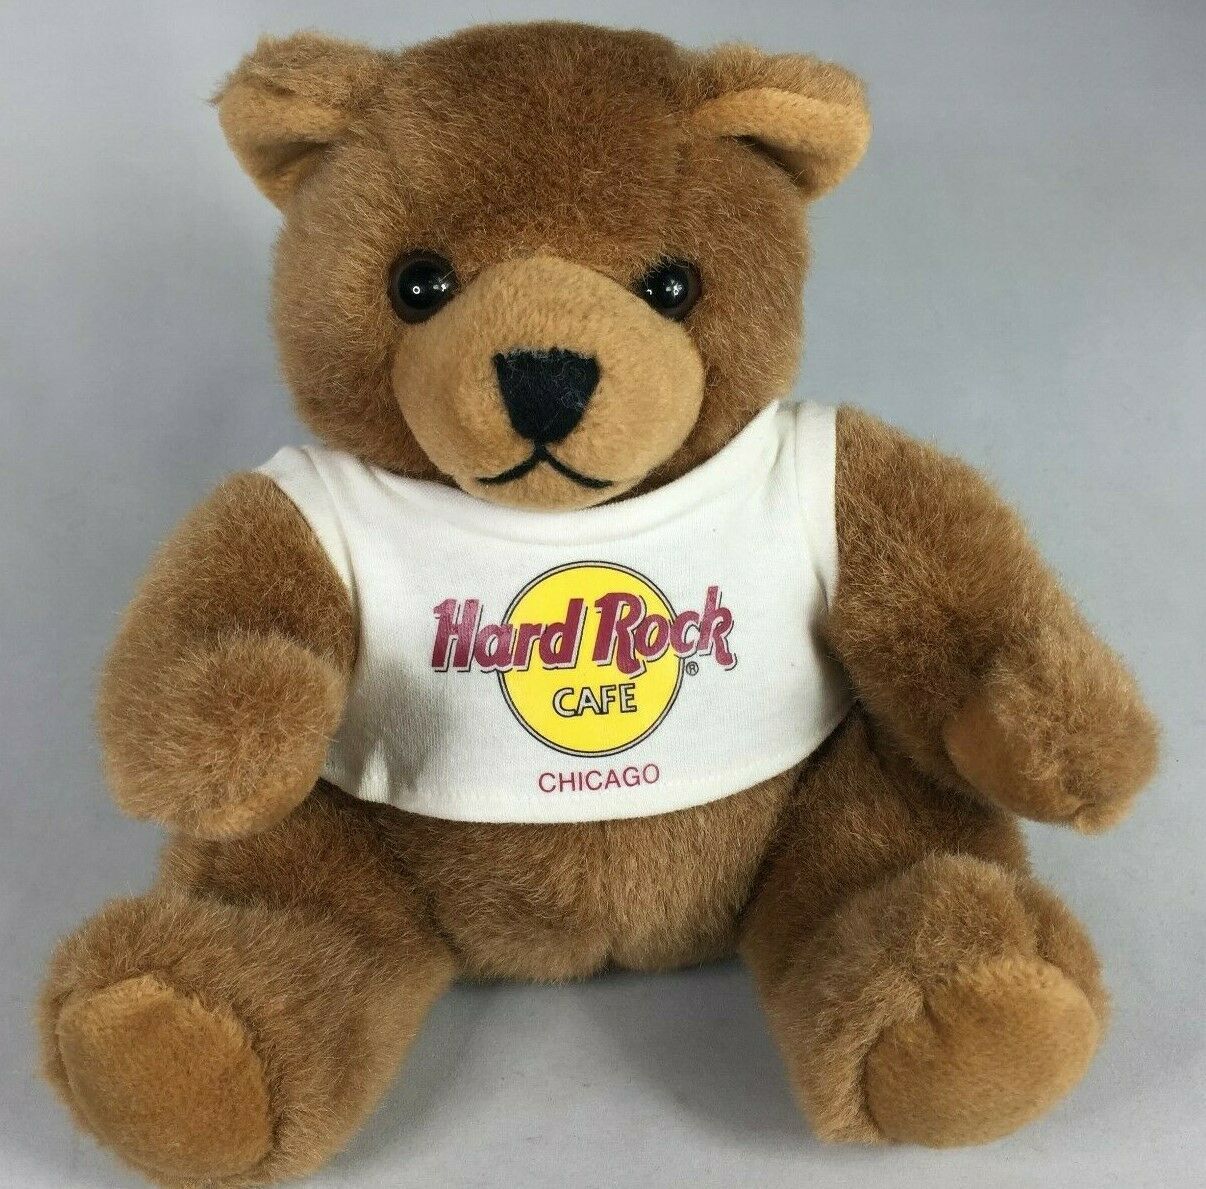 Hard Rock Cafe- "chicago" 1990 Collectible Plush Teddy Bear Vintage Logo T-shirt